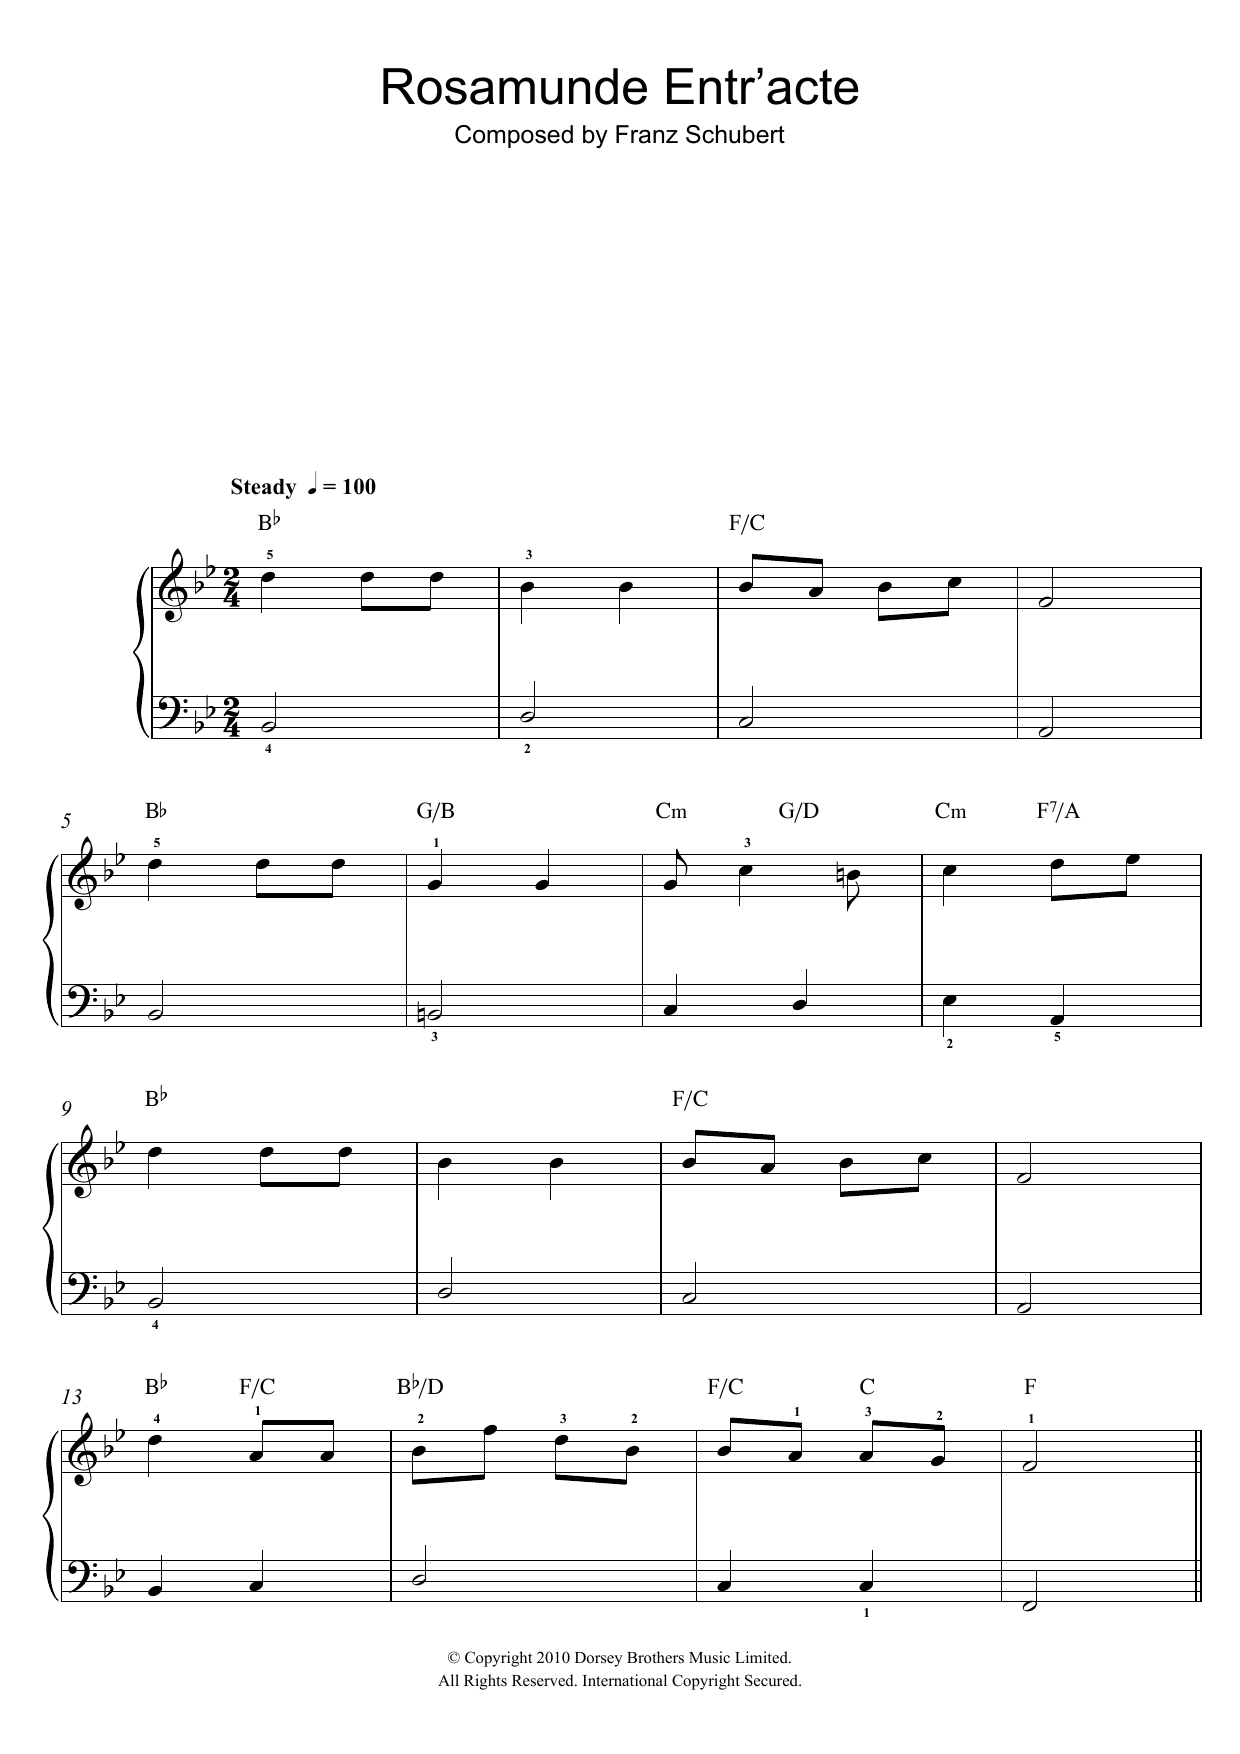 Franz Schubert Rosamunde Entr'acte Sheet Music Notes & Chords for Beginner Piano - Download or Print PDF